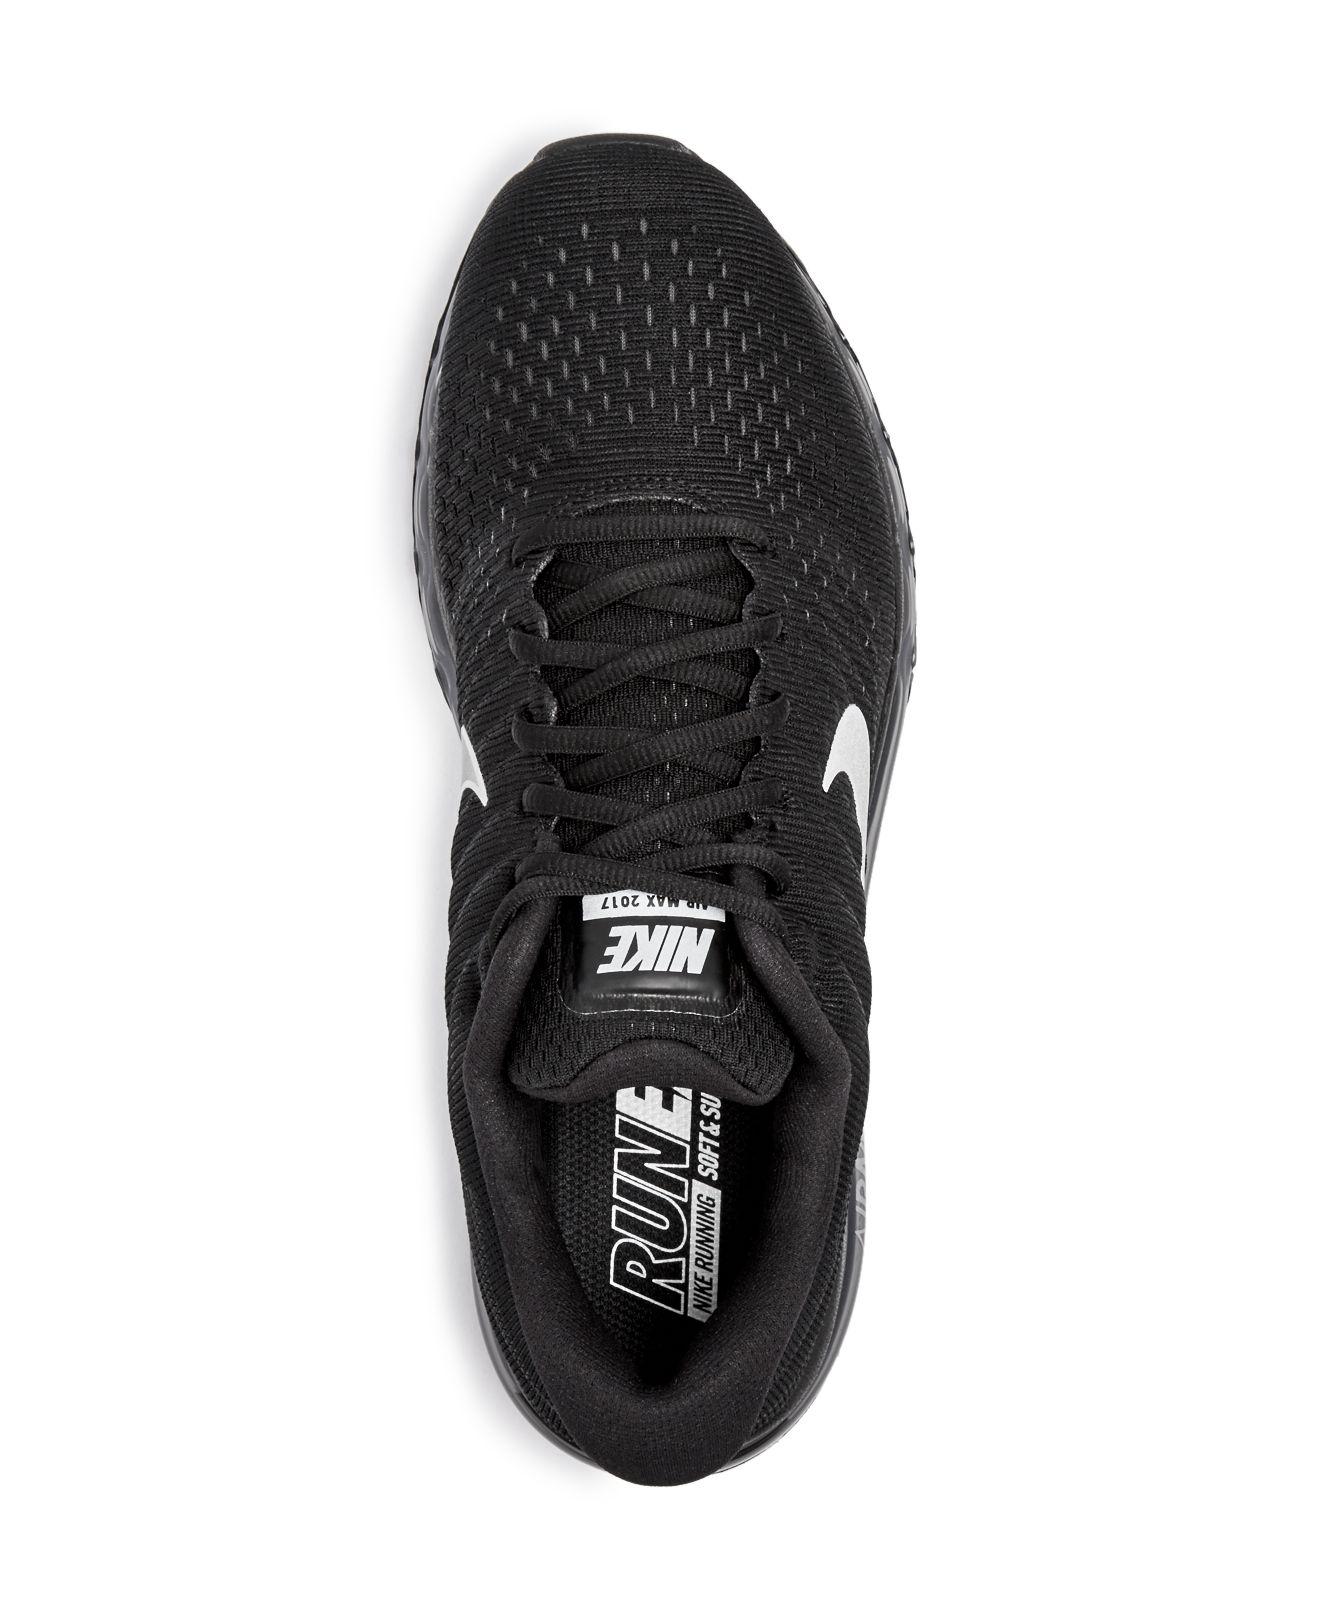 nike mens air max 2017 low top lace up running sneaker